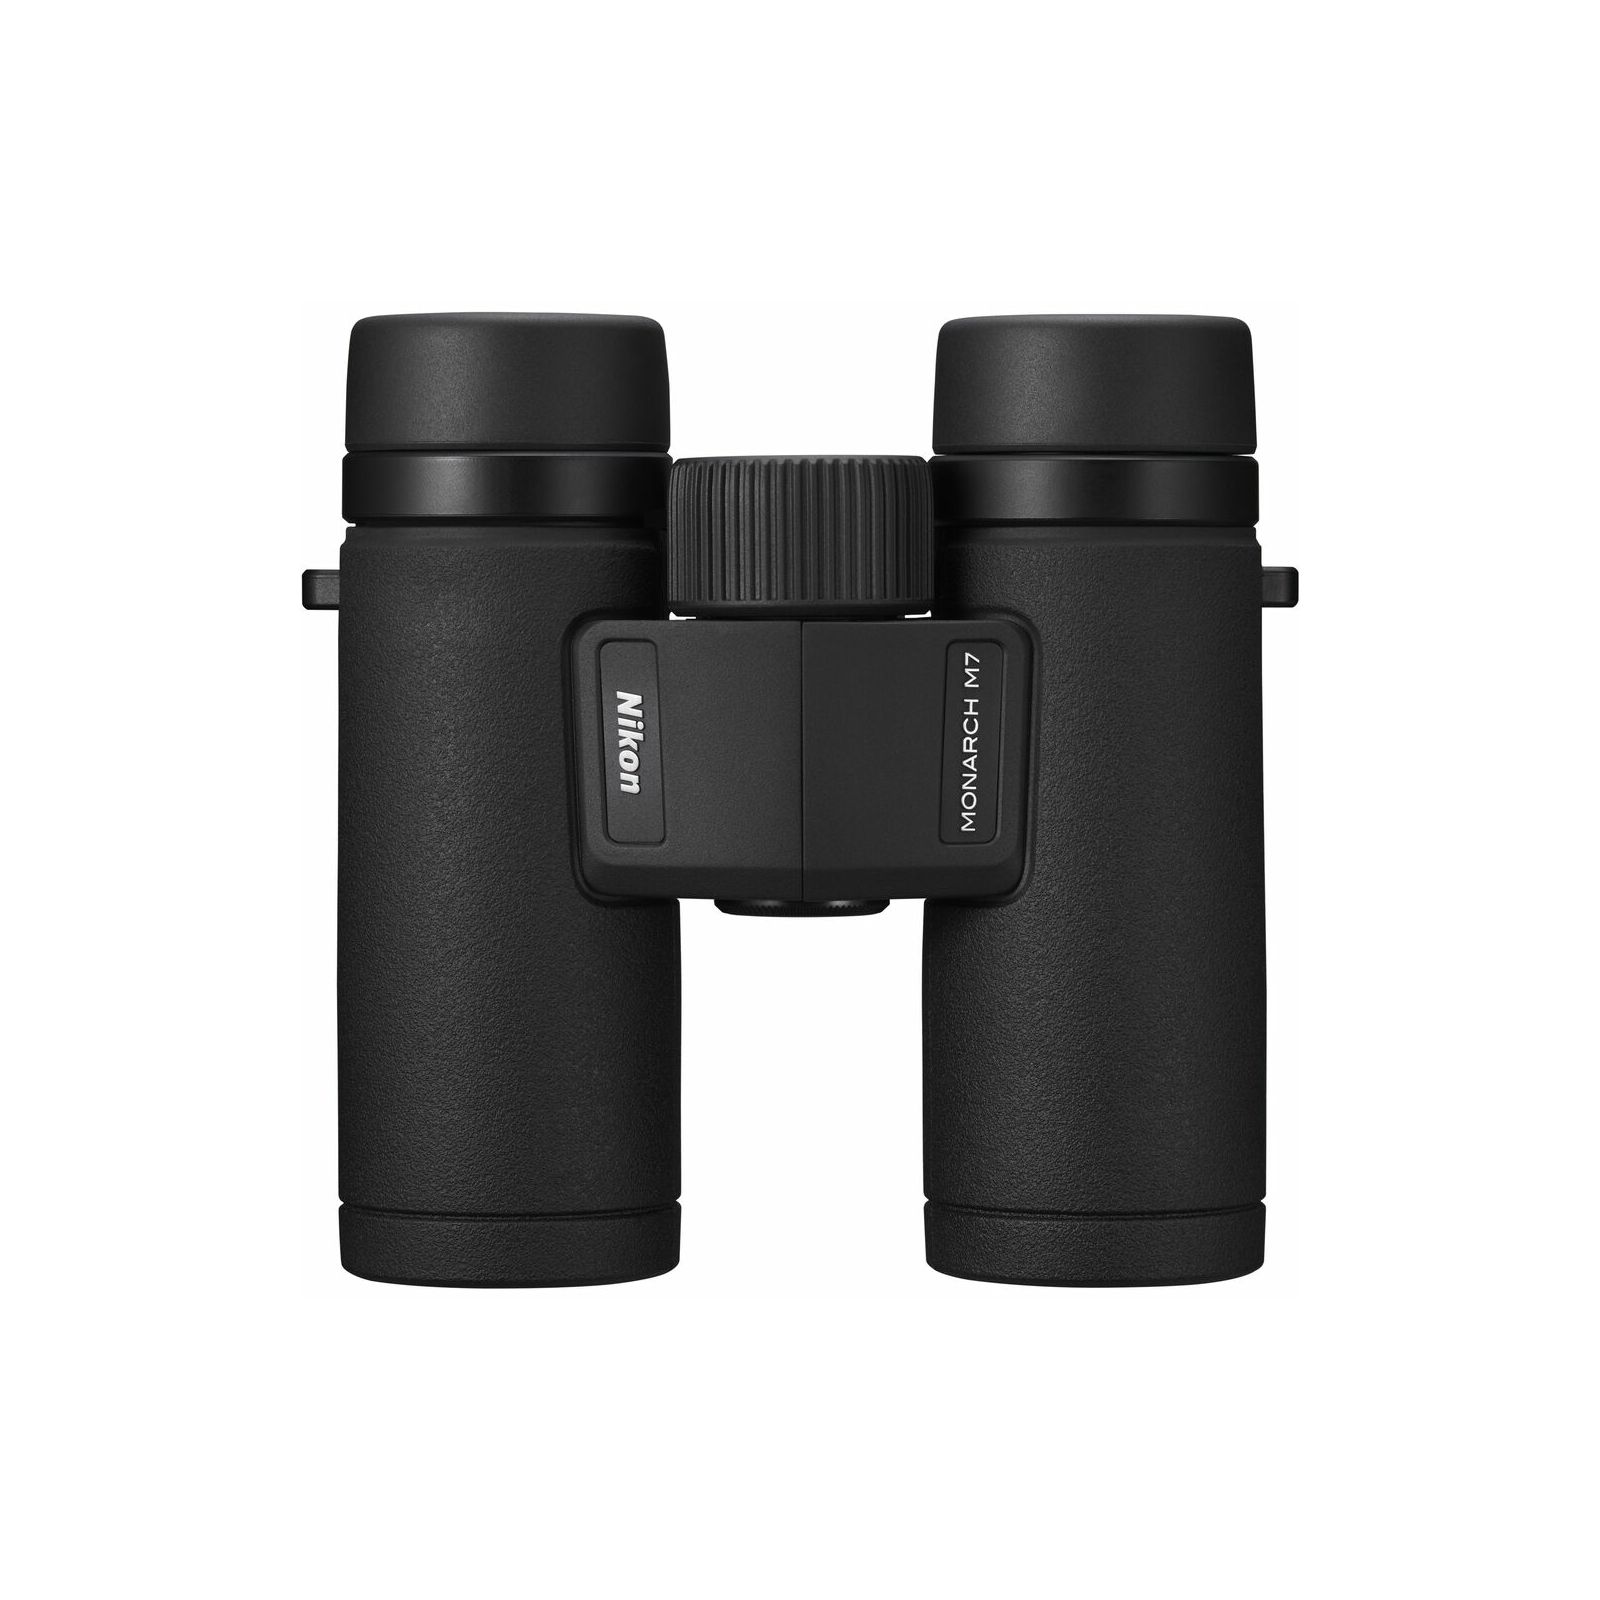 Nikon Monarch M7 10x30 Binoculars dalekozor (BAA901SA)